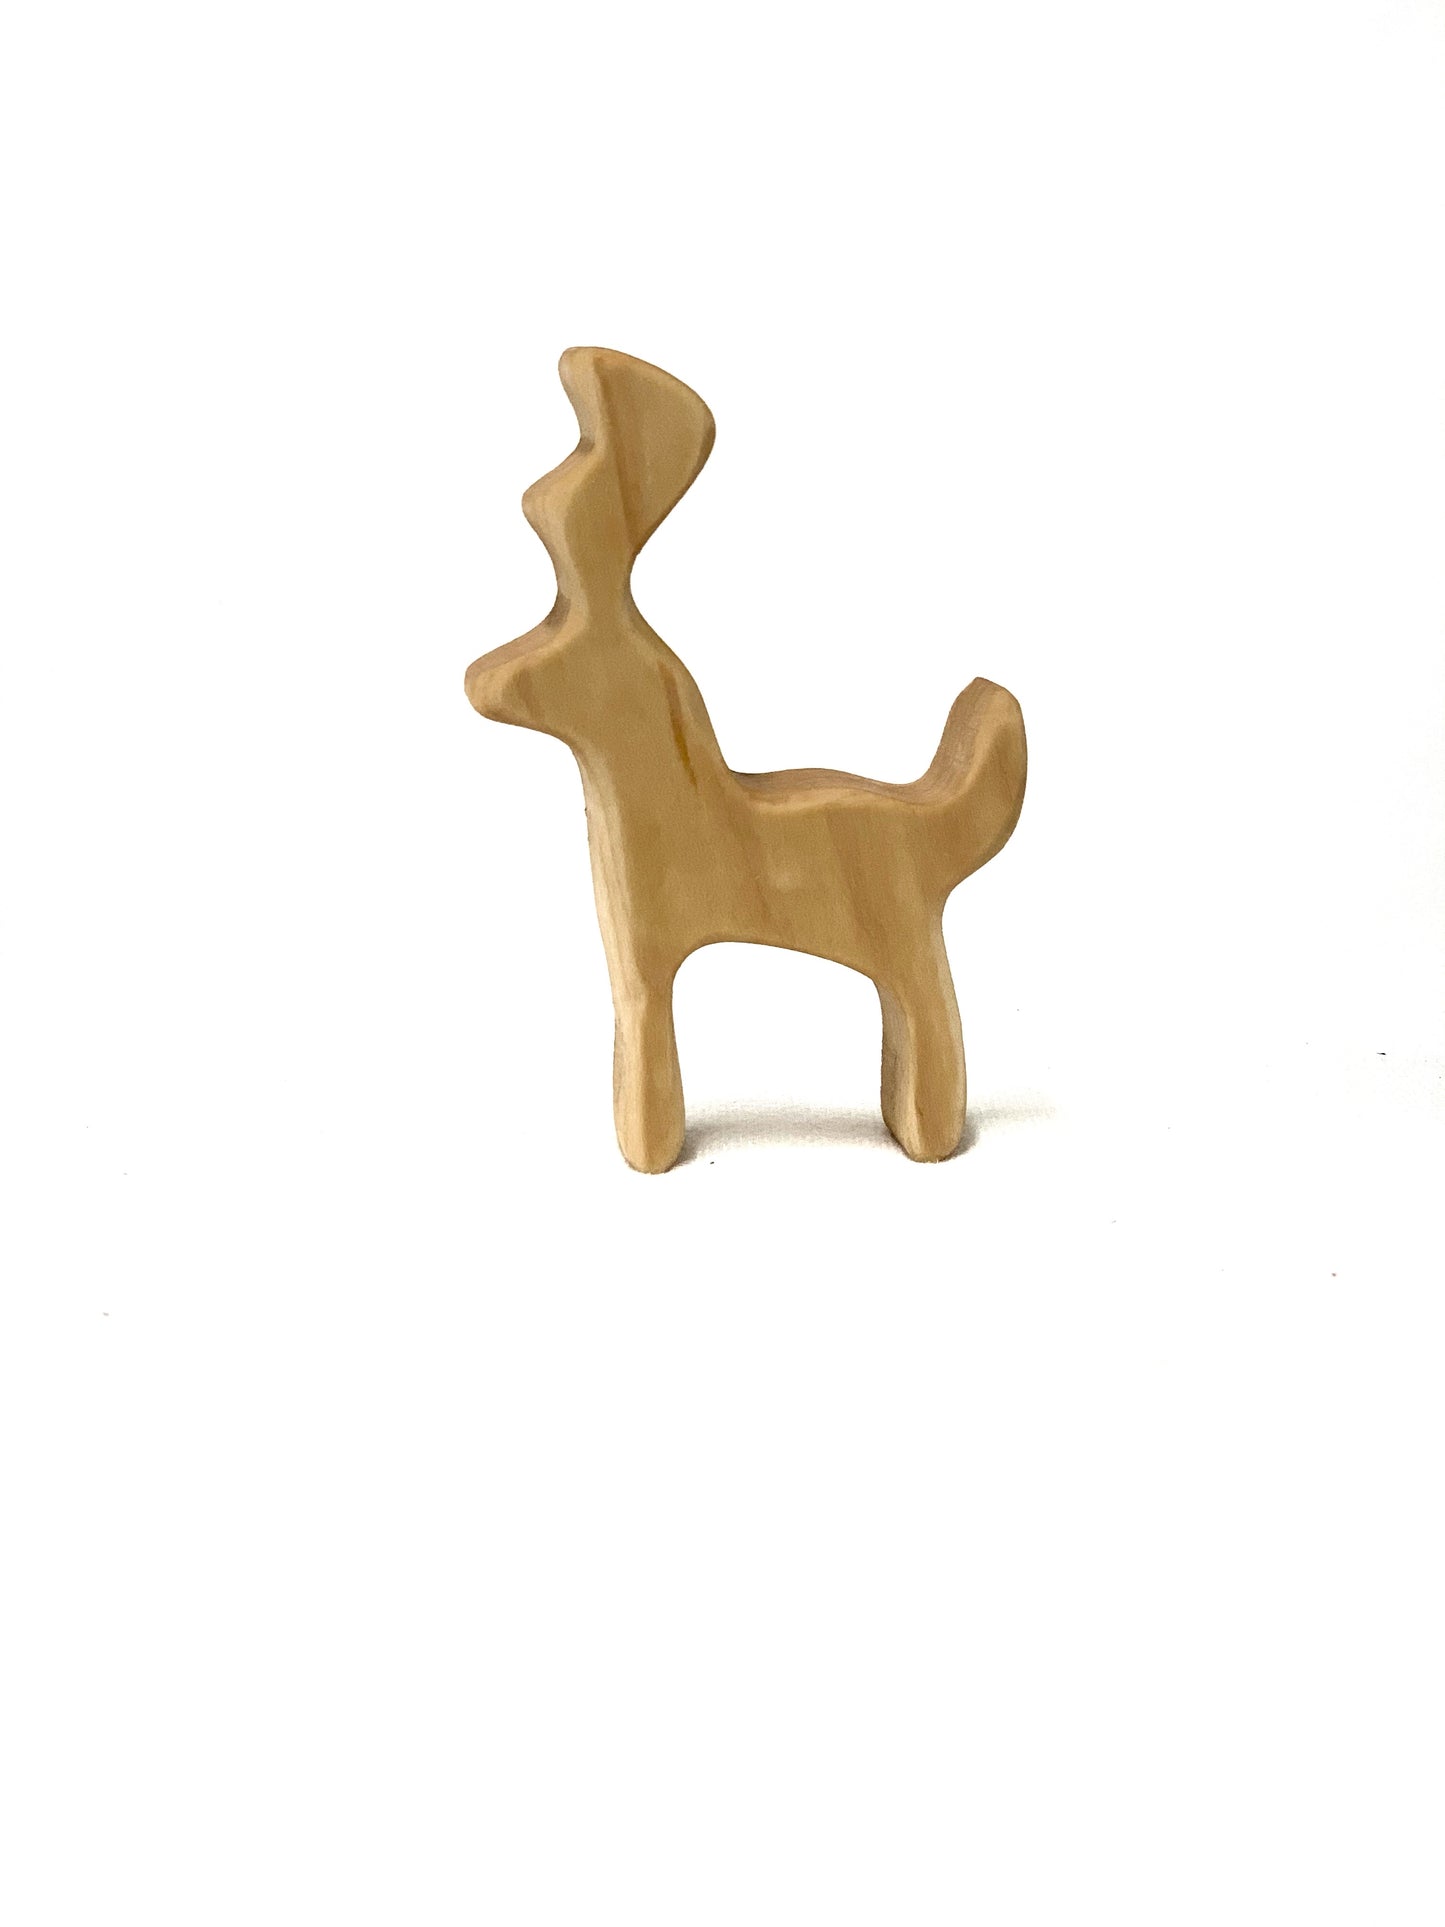 Buck Woodland Deer Animal Wood Toy Figurines